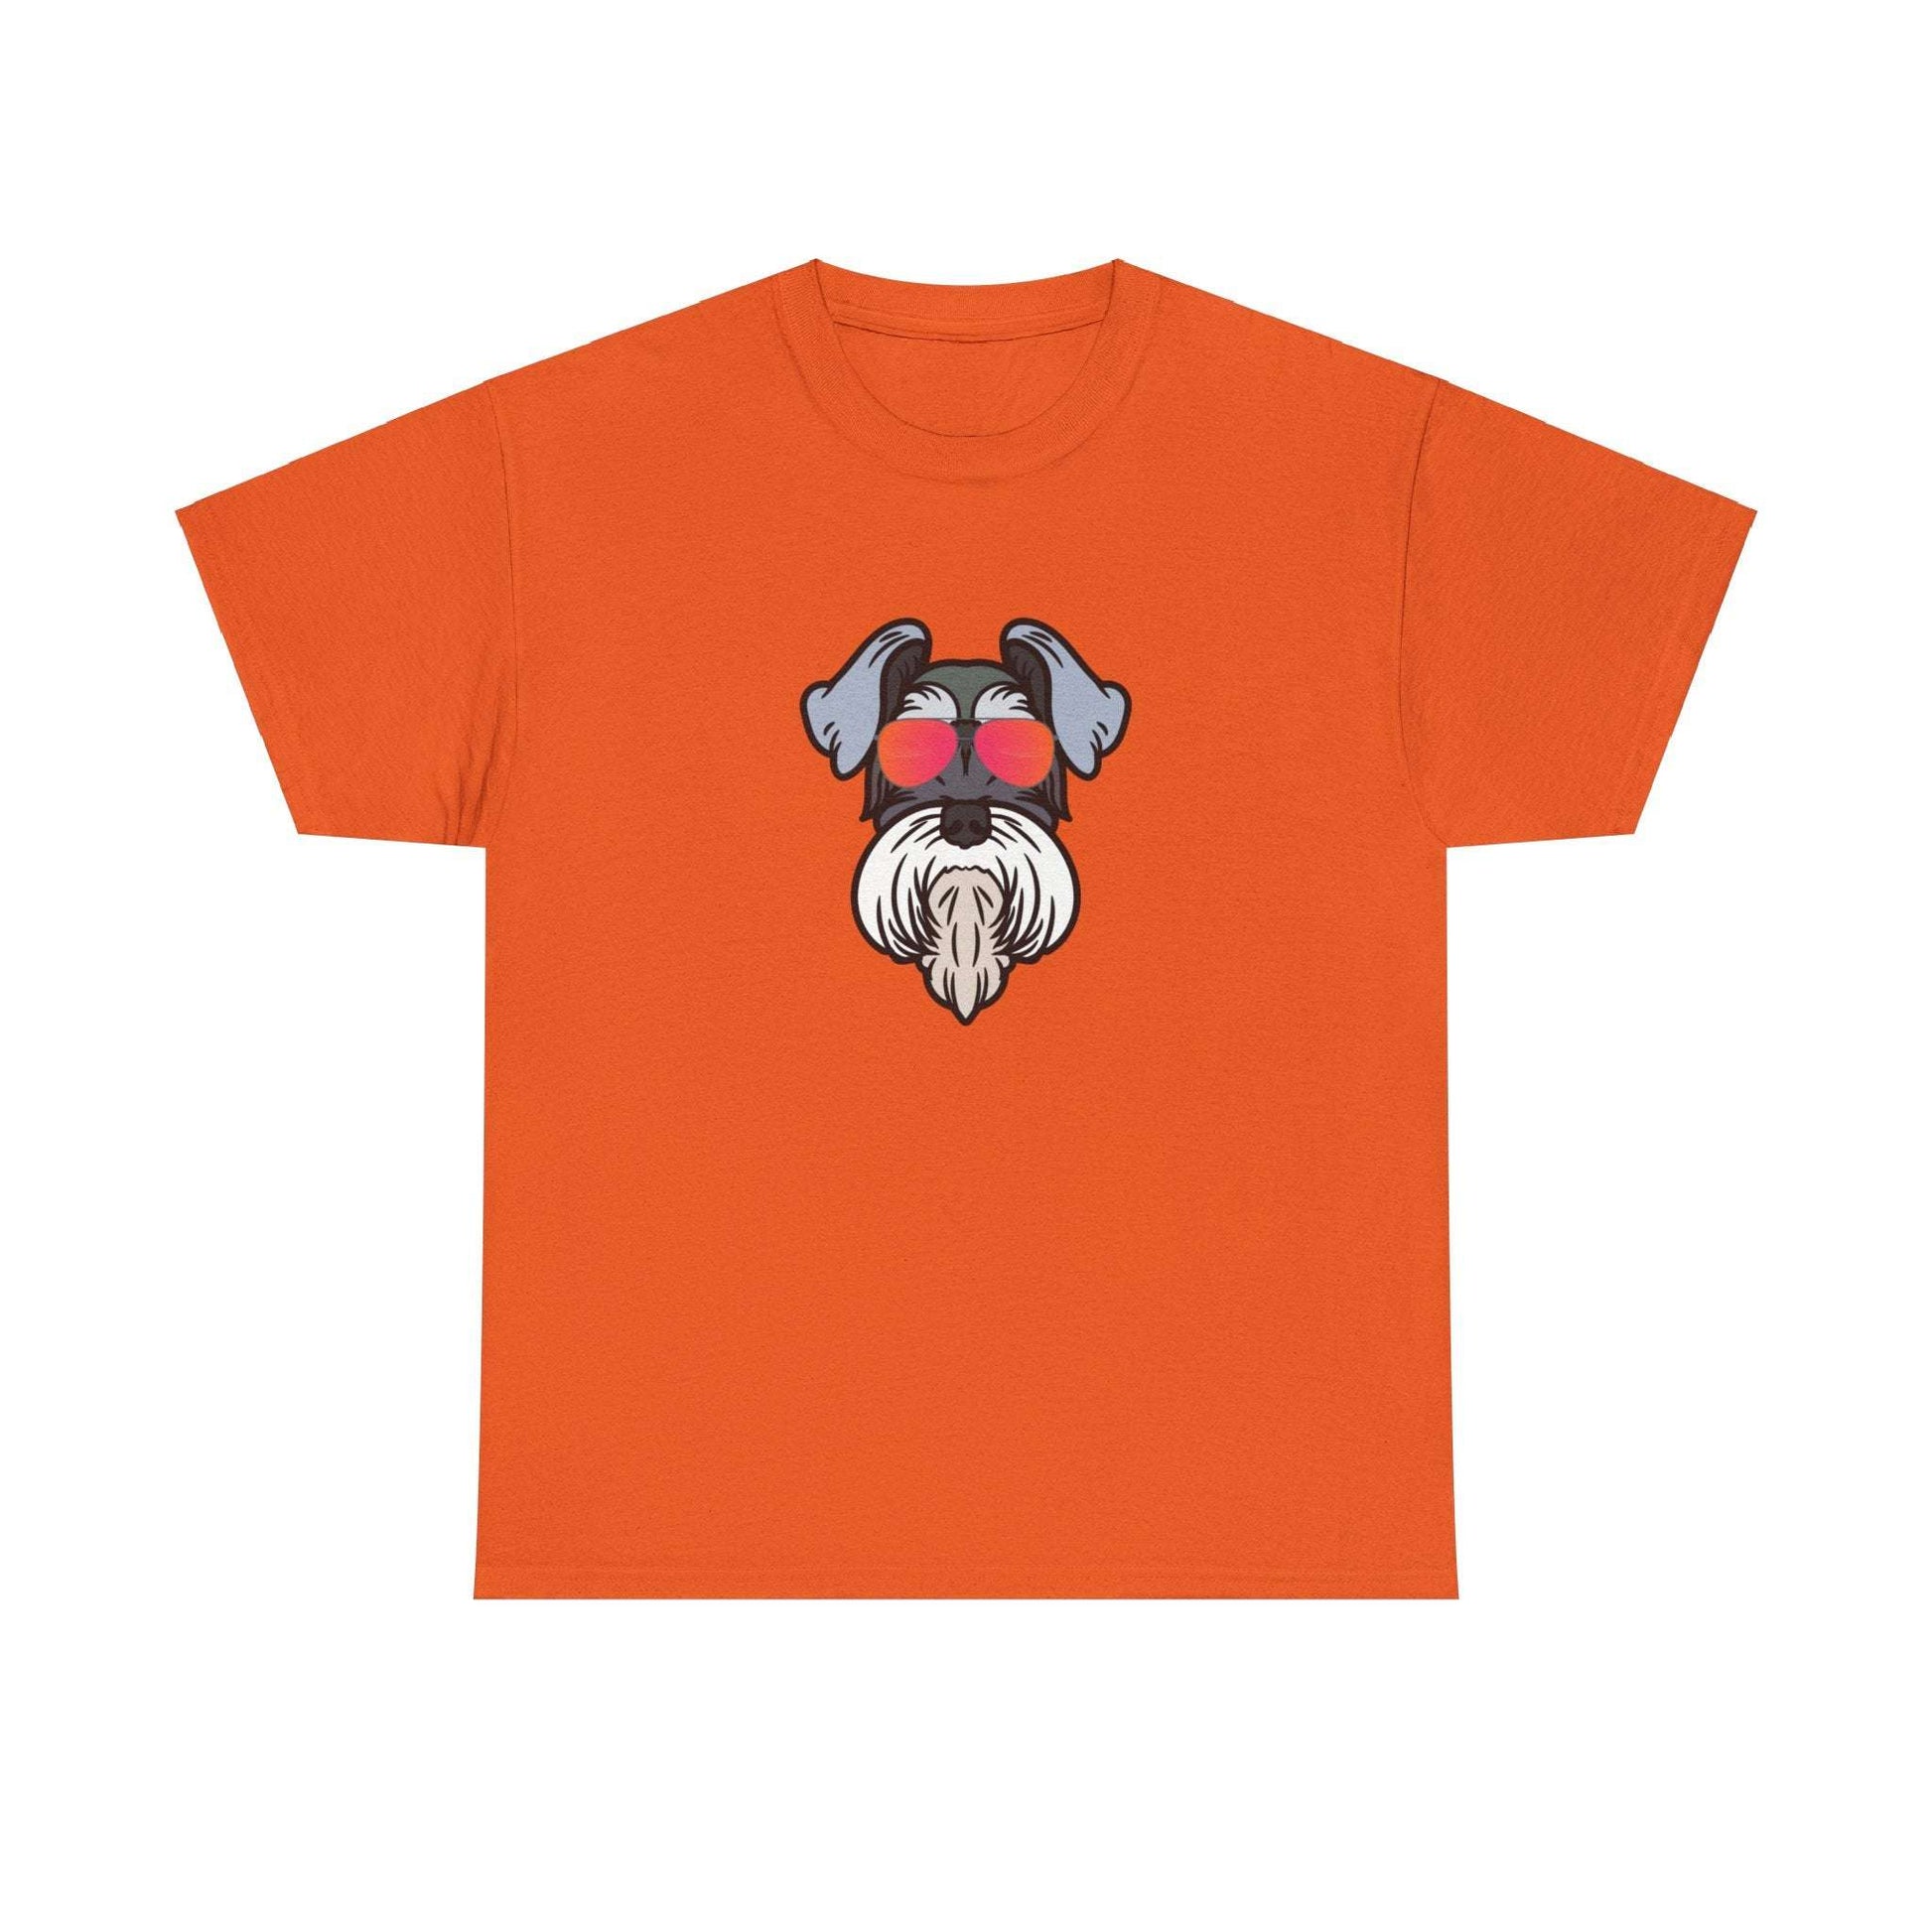 Fabulous Tee Shirts' 'Cool Schnauzer' orange t-shirt displayed to emphasize its superior quality.